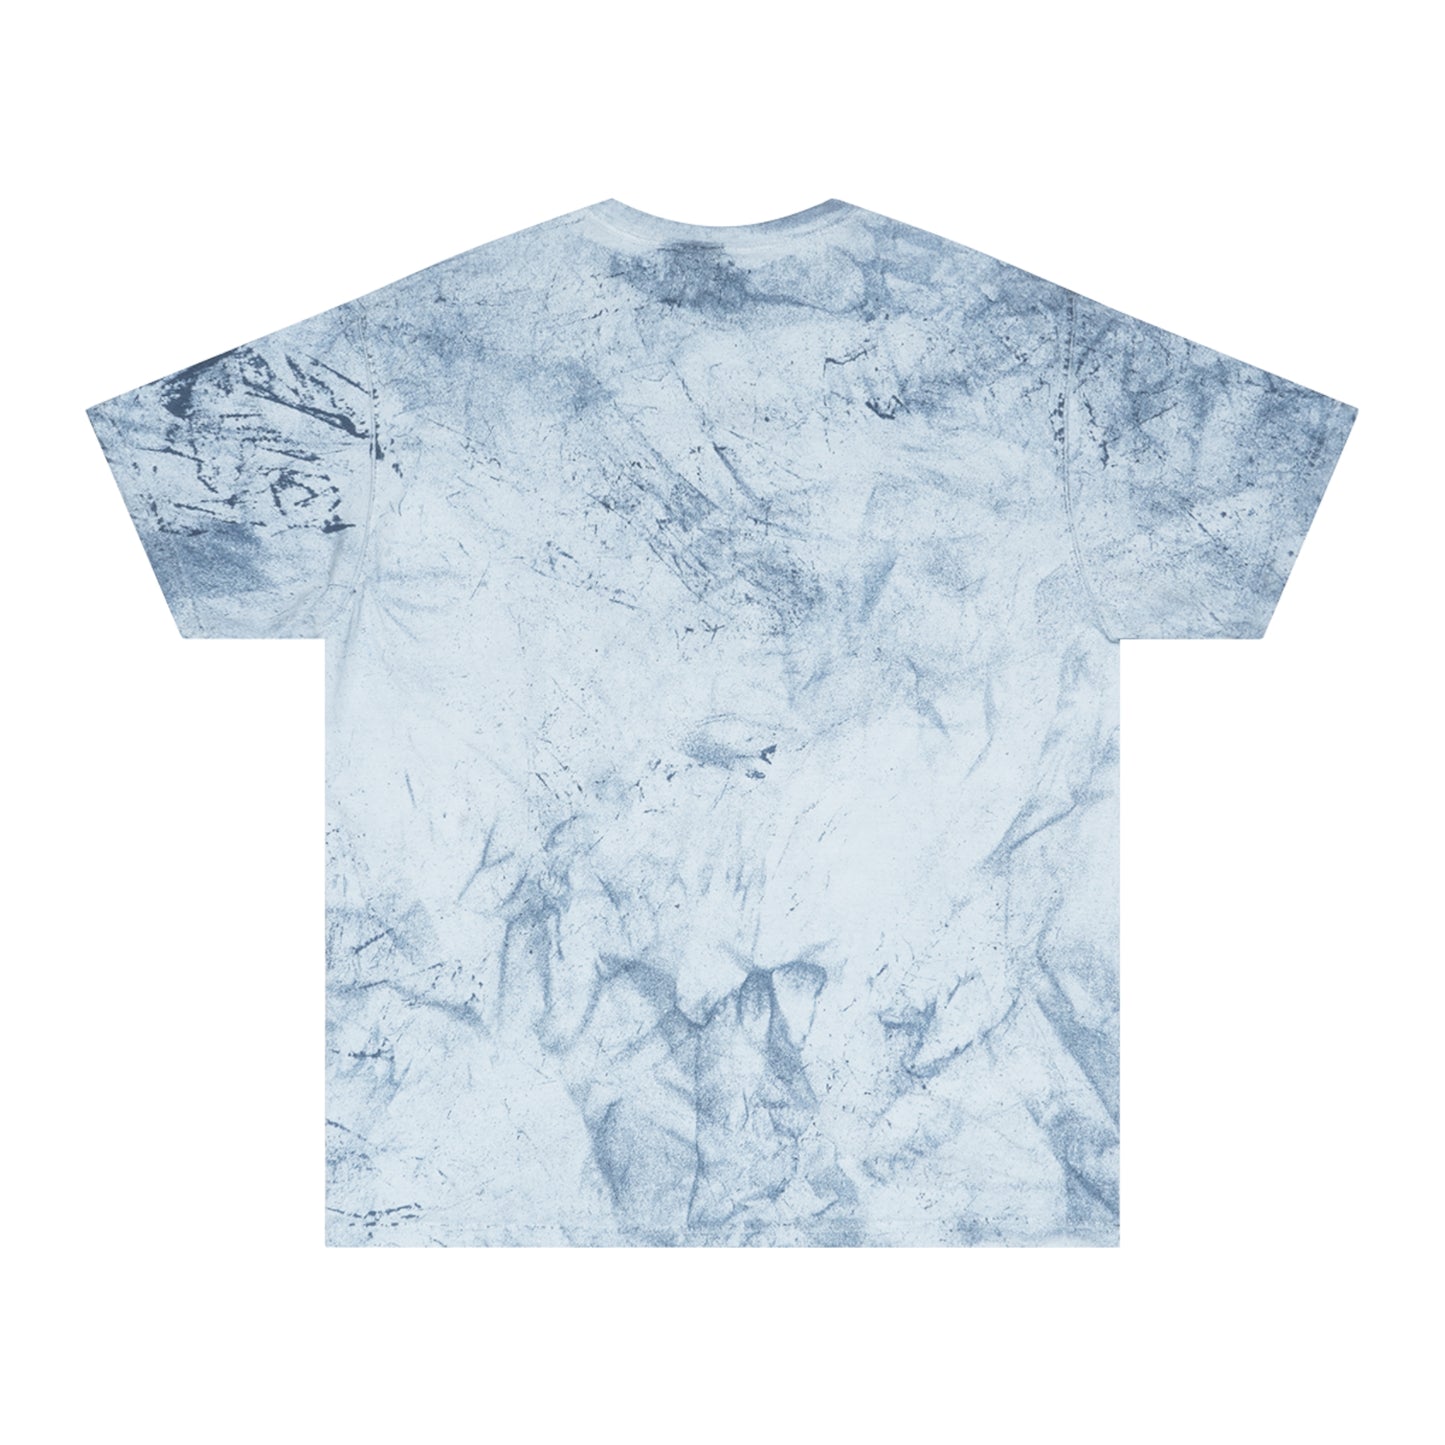 Tie Dye Team qal̕qaləx̌ič Shirt